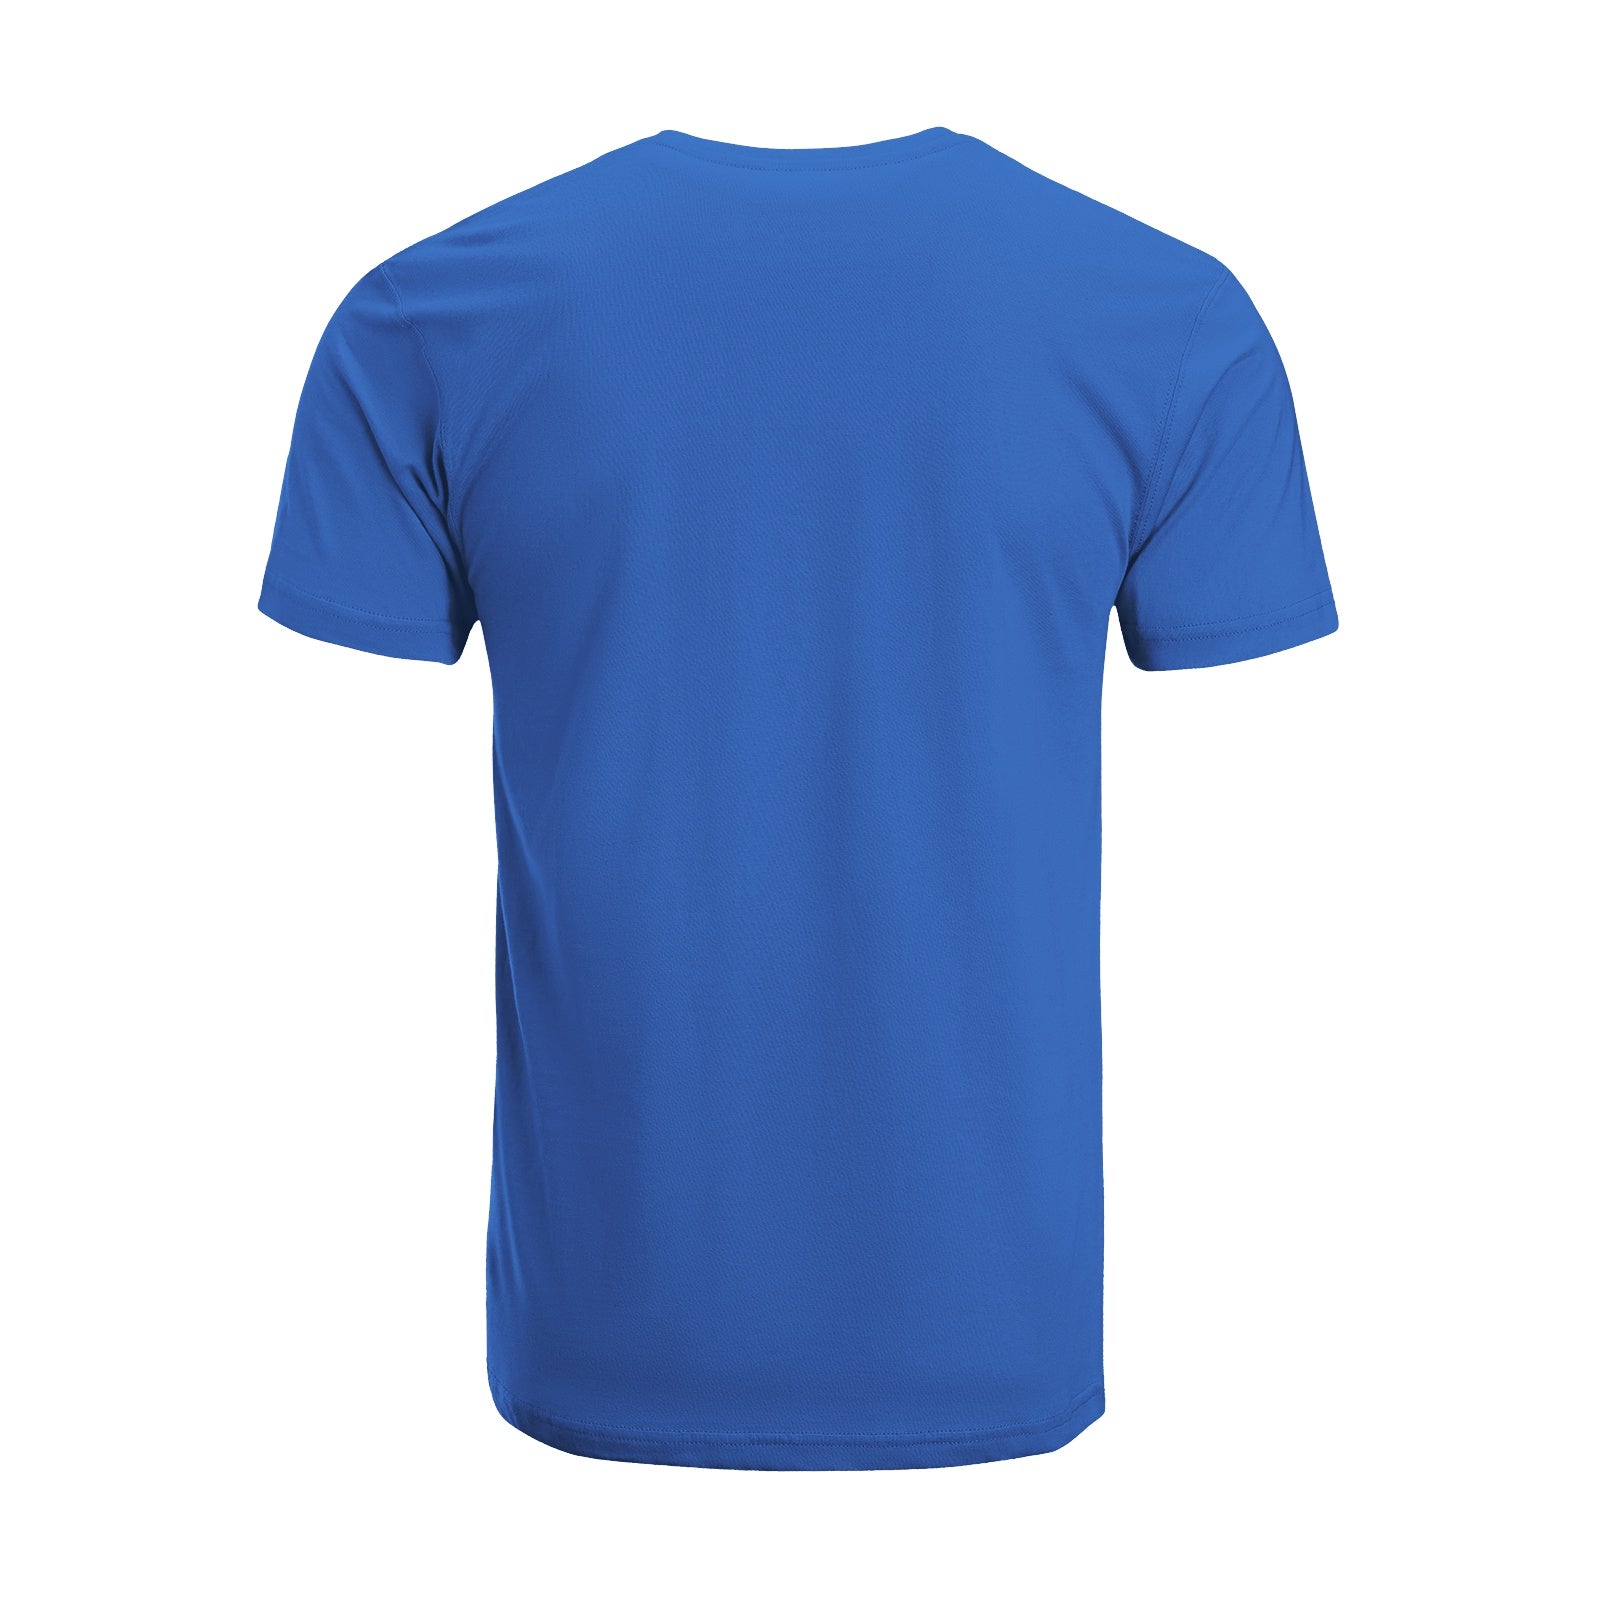 Unisex Short Sleeve Crew Neck Cotton Jersey T-Shirt CAT 28 - Tara-Outfits.com